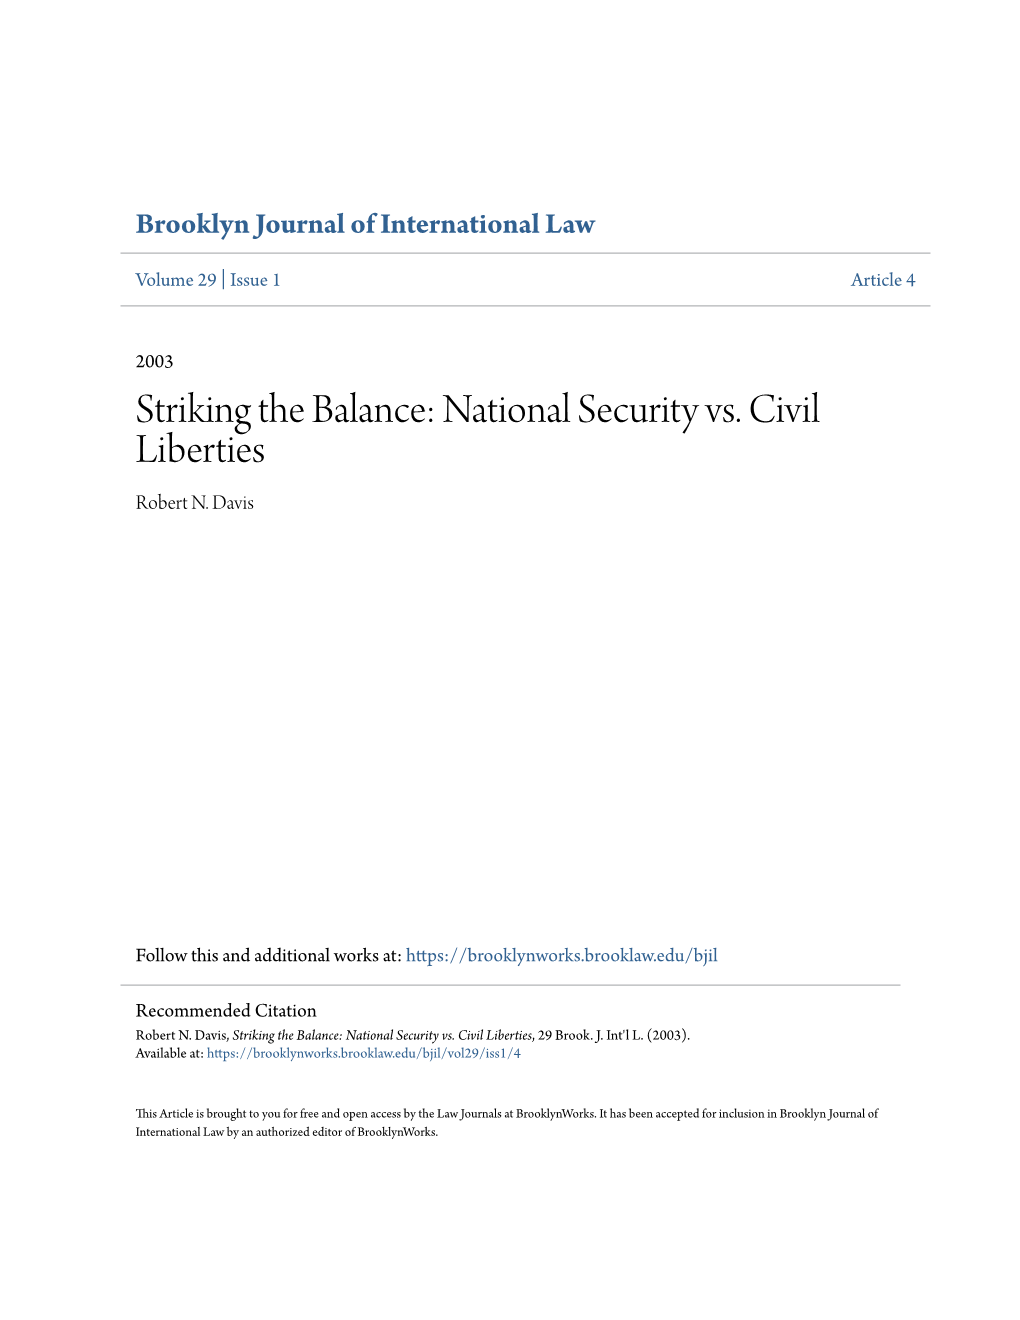 Striking the Balance: National Security Vs. Civil Liberties Robert N